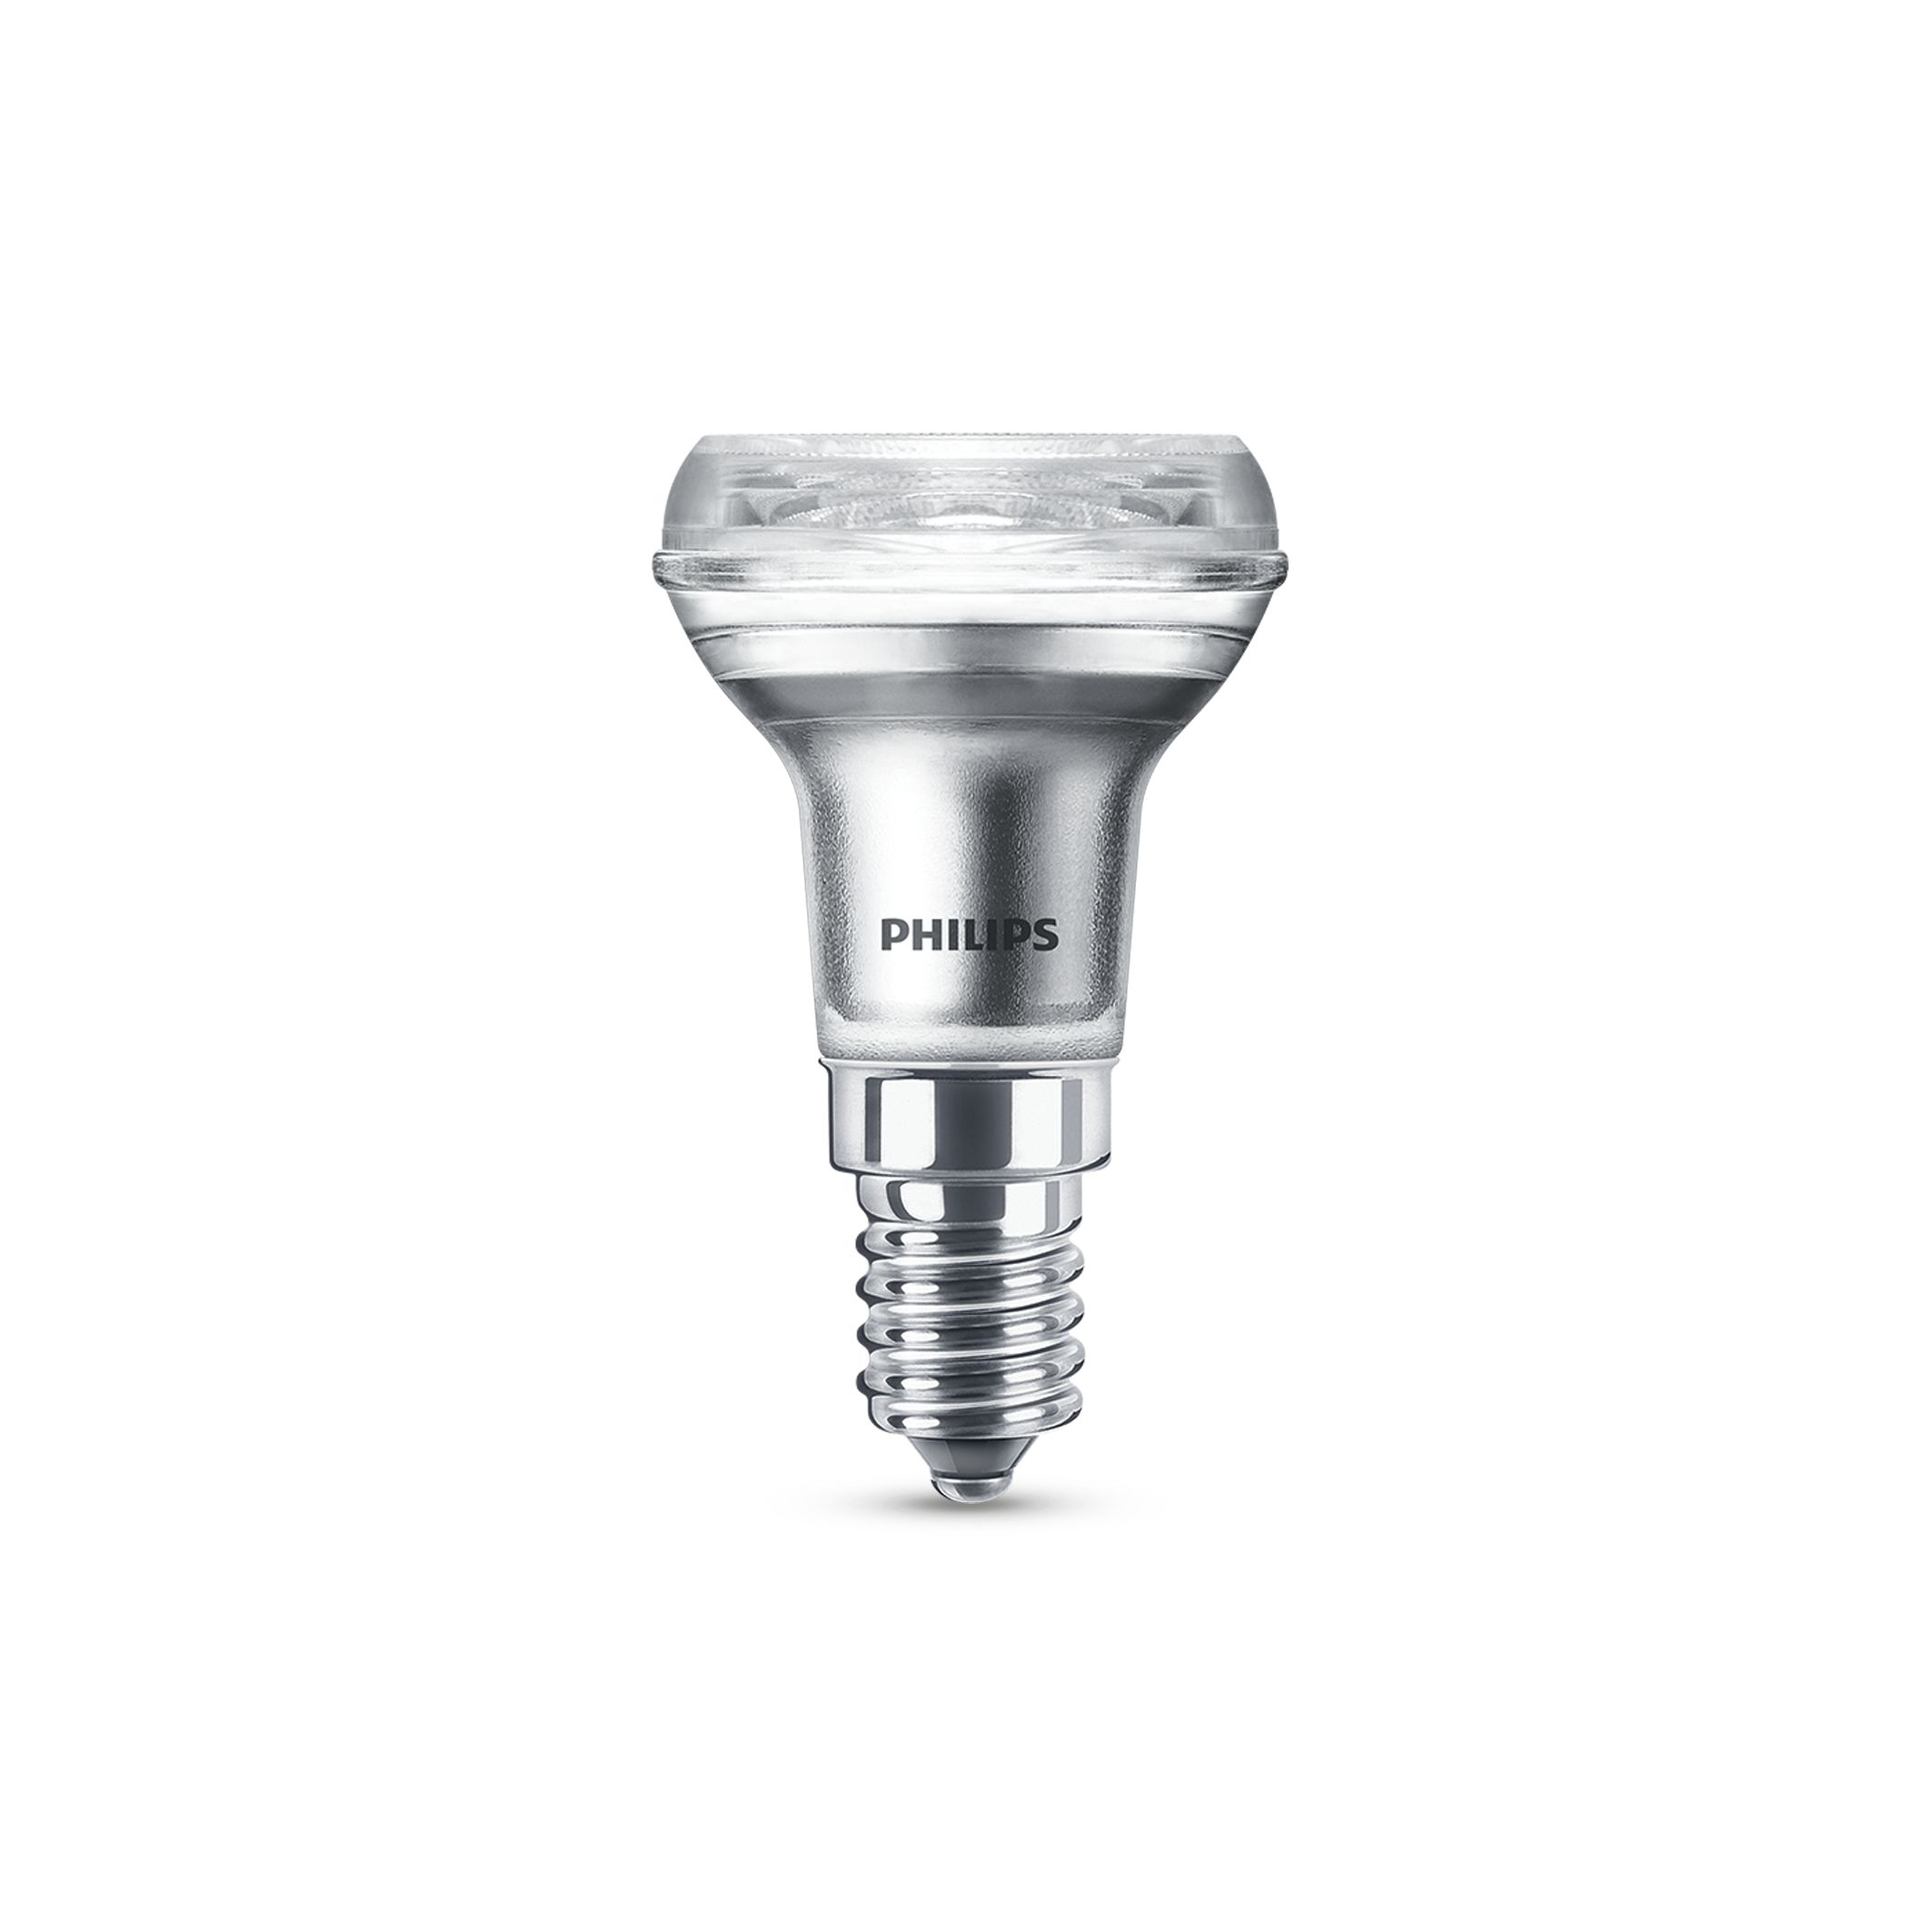 CorePro LEDspot reflectorlampen | 7178612 Philips